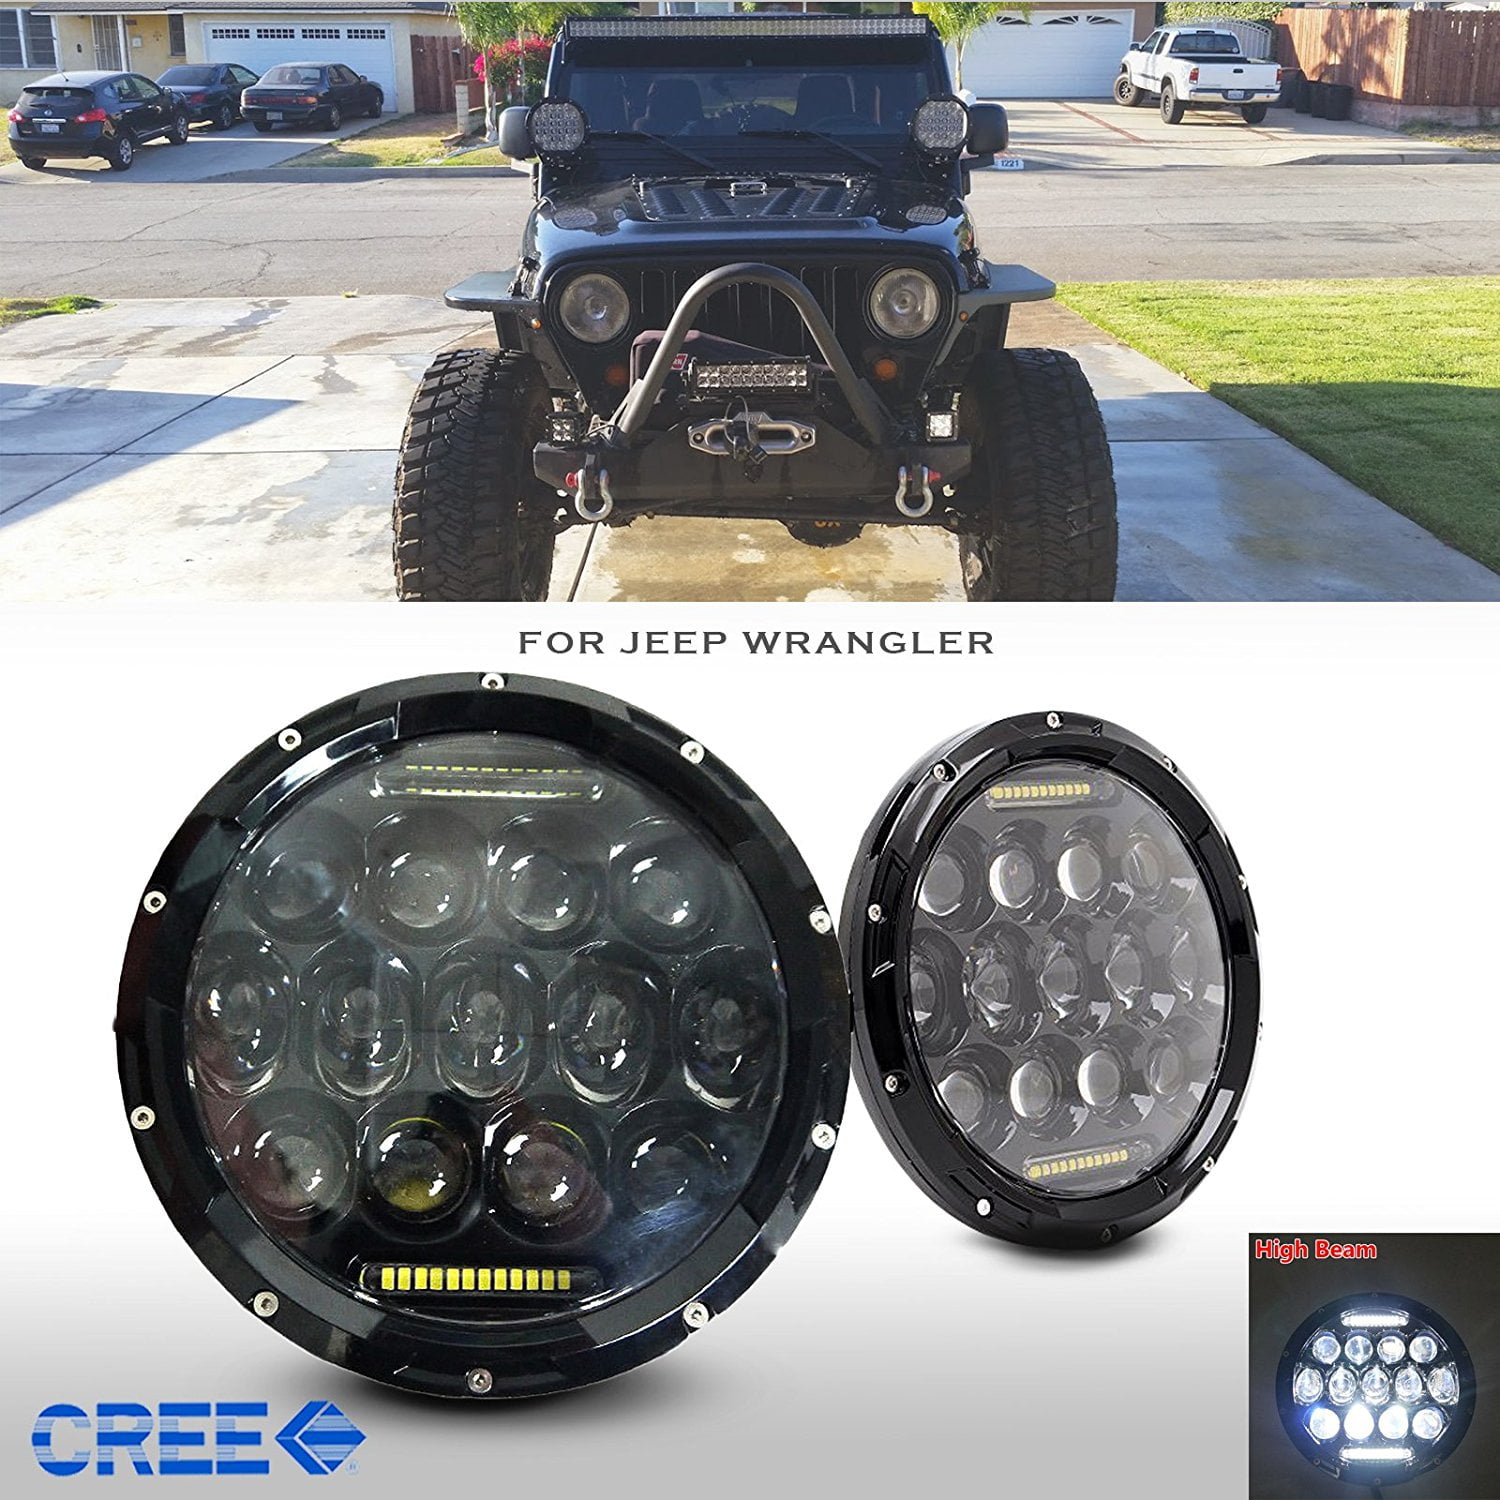 PAIR 7" INCH 150W LED Headlight Hi/Lo Beam Fit For Jeep Wrangler CJ JK LJ 97-17 